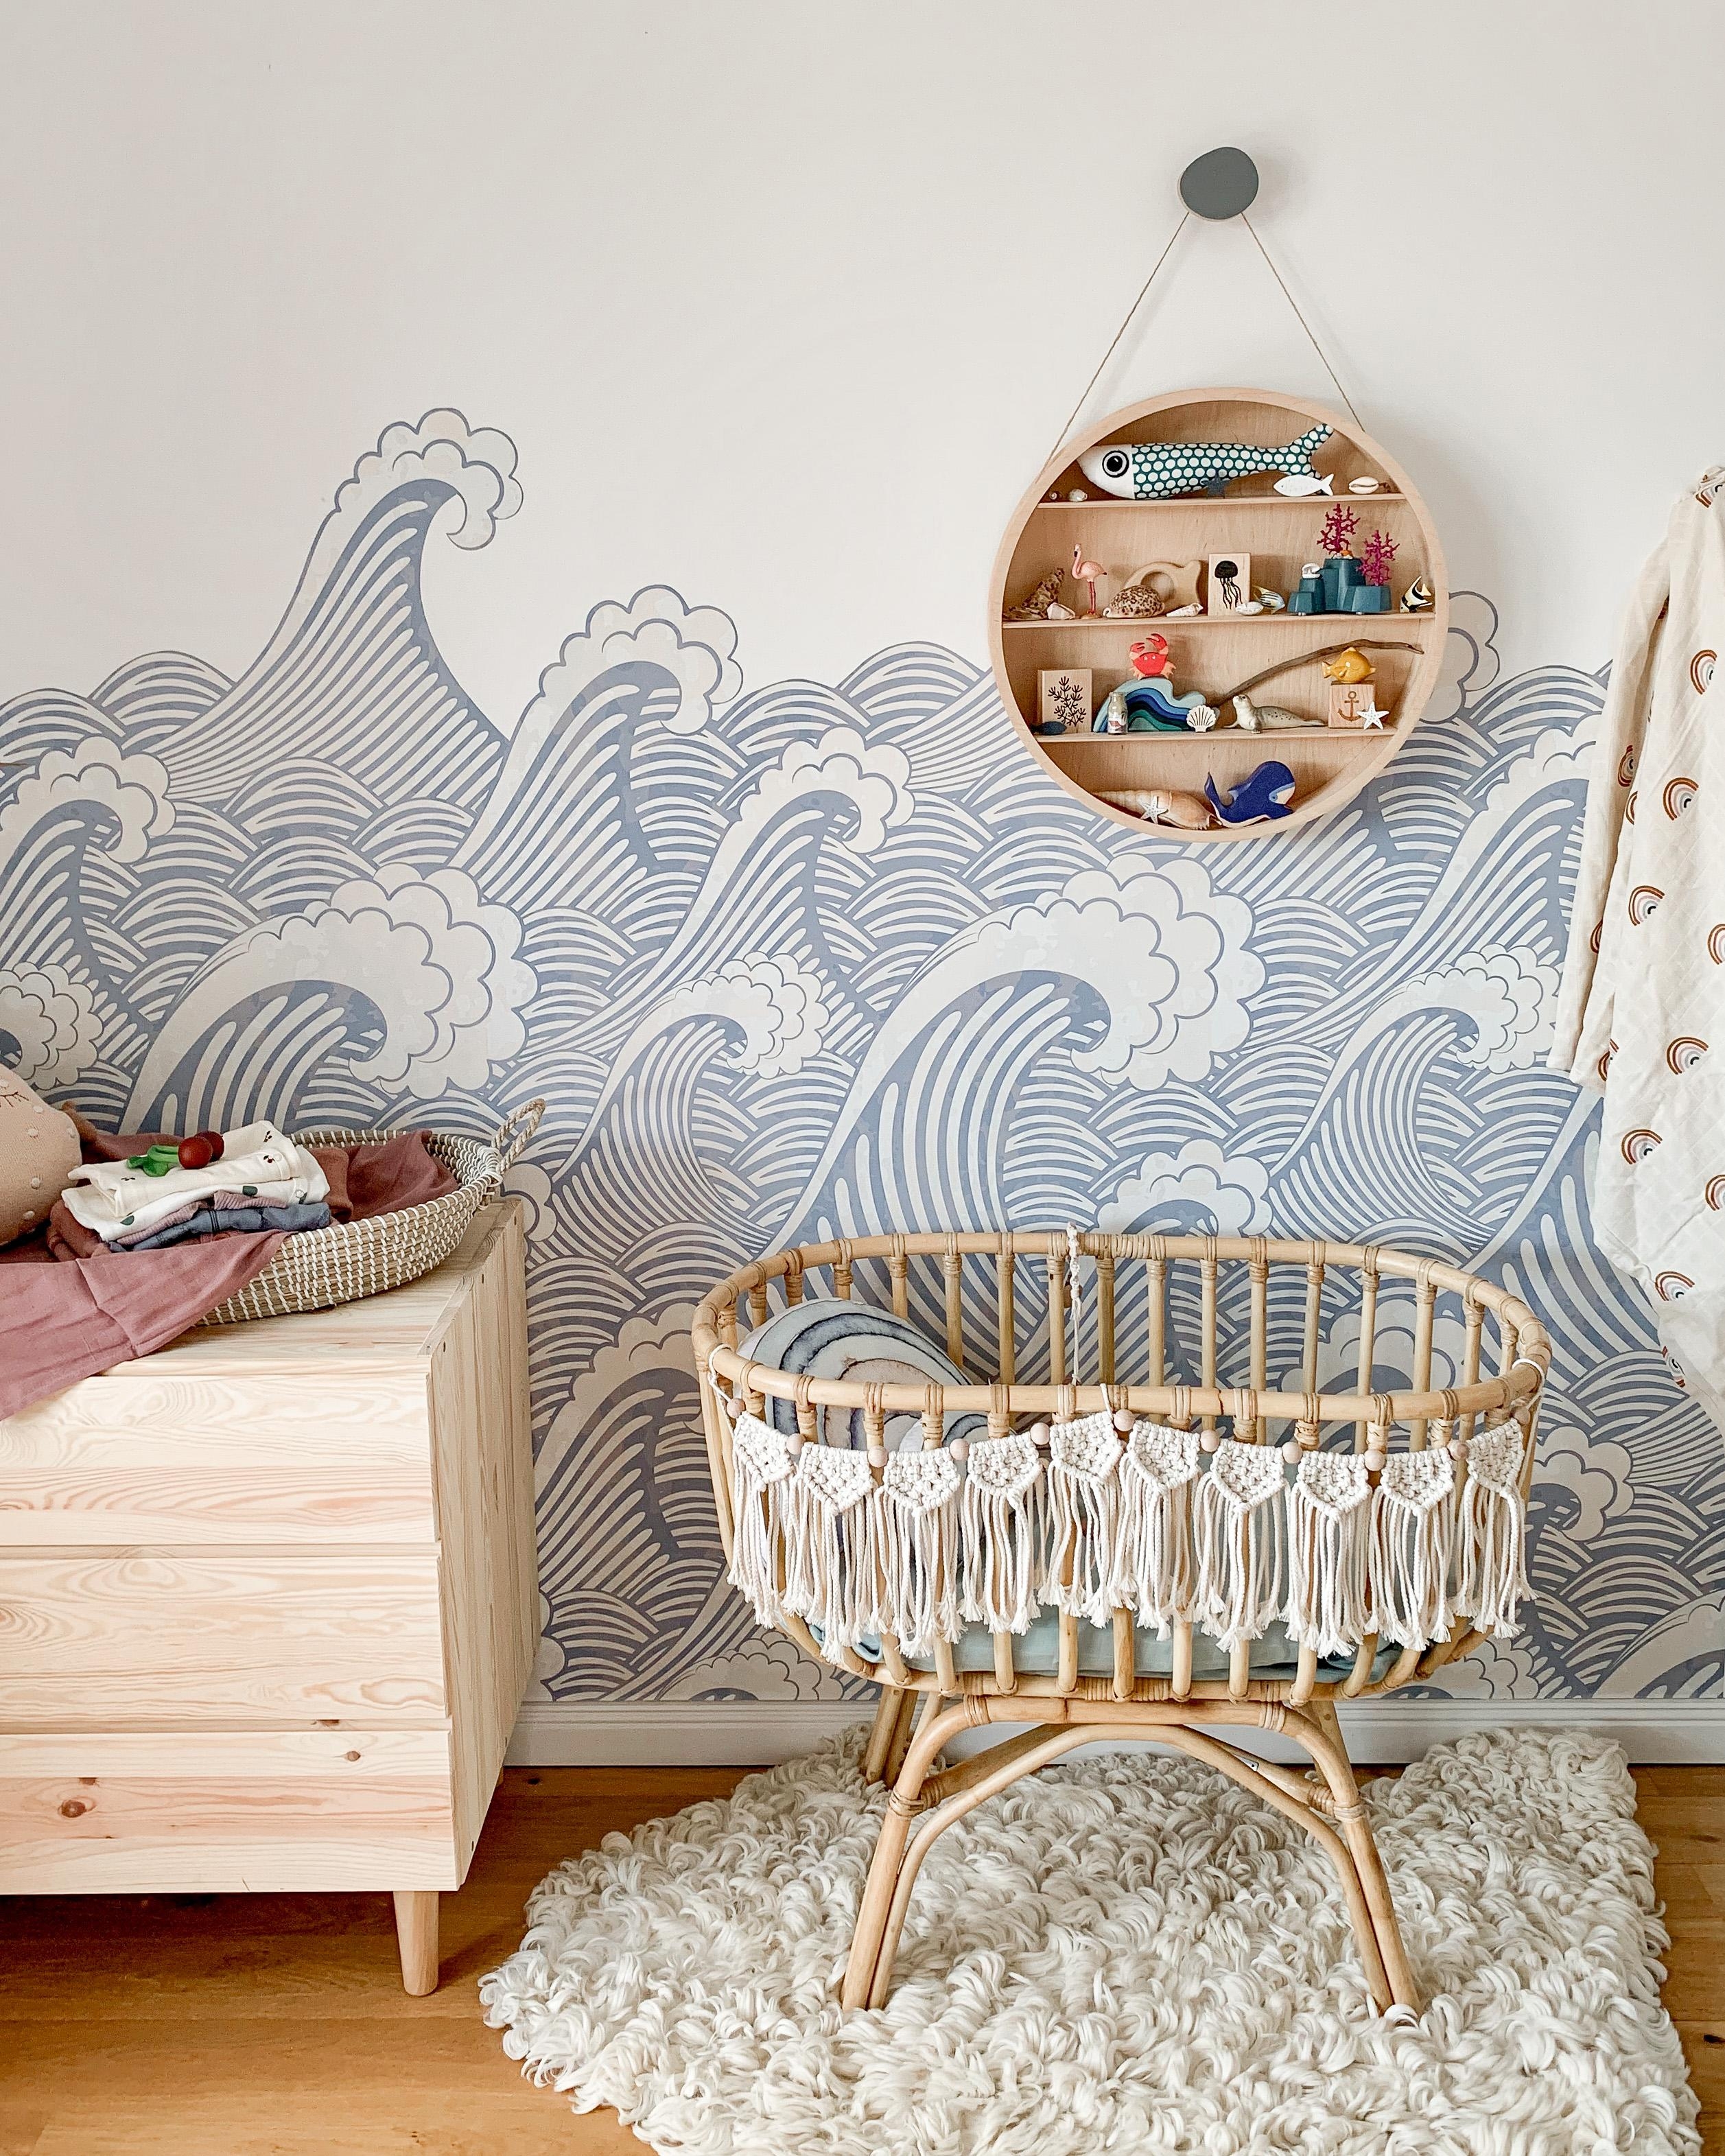 Naturtöne im Babyzimmer ...
#babyzimmer #babyzimmergestaltung #kinderzimmer #makramee #rattan 